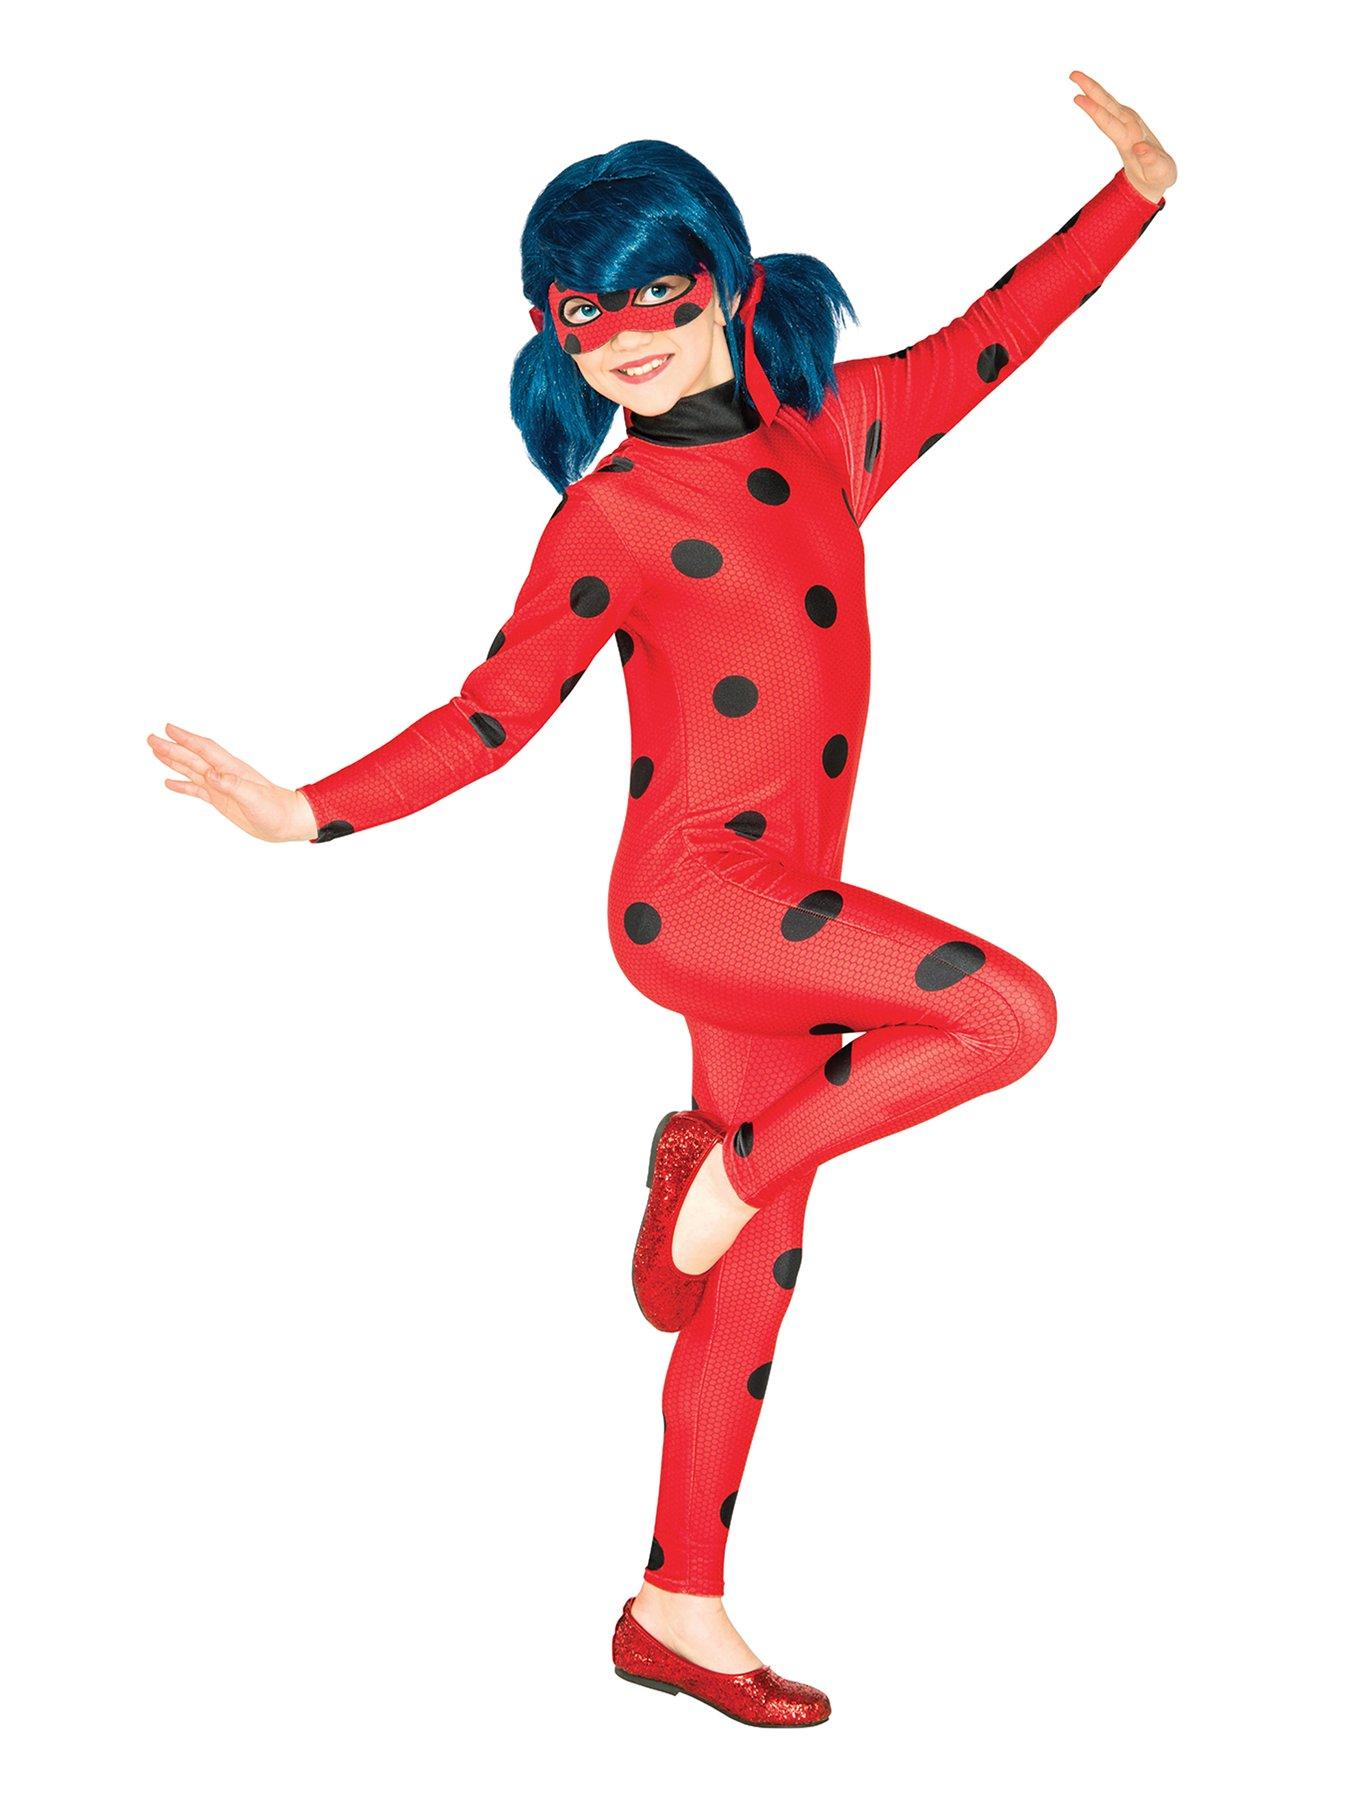 Ladybug Costume, Toddler Girl Halloween Costume, Ladybird Red Cape Costume,  Gift for Preschool Girl 